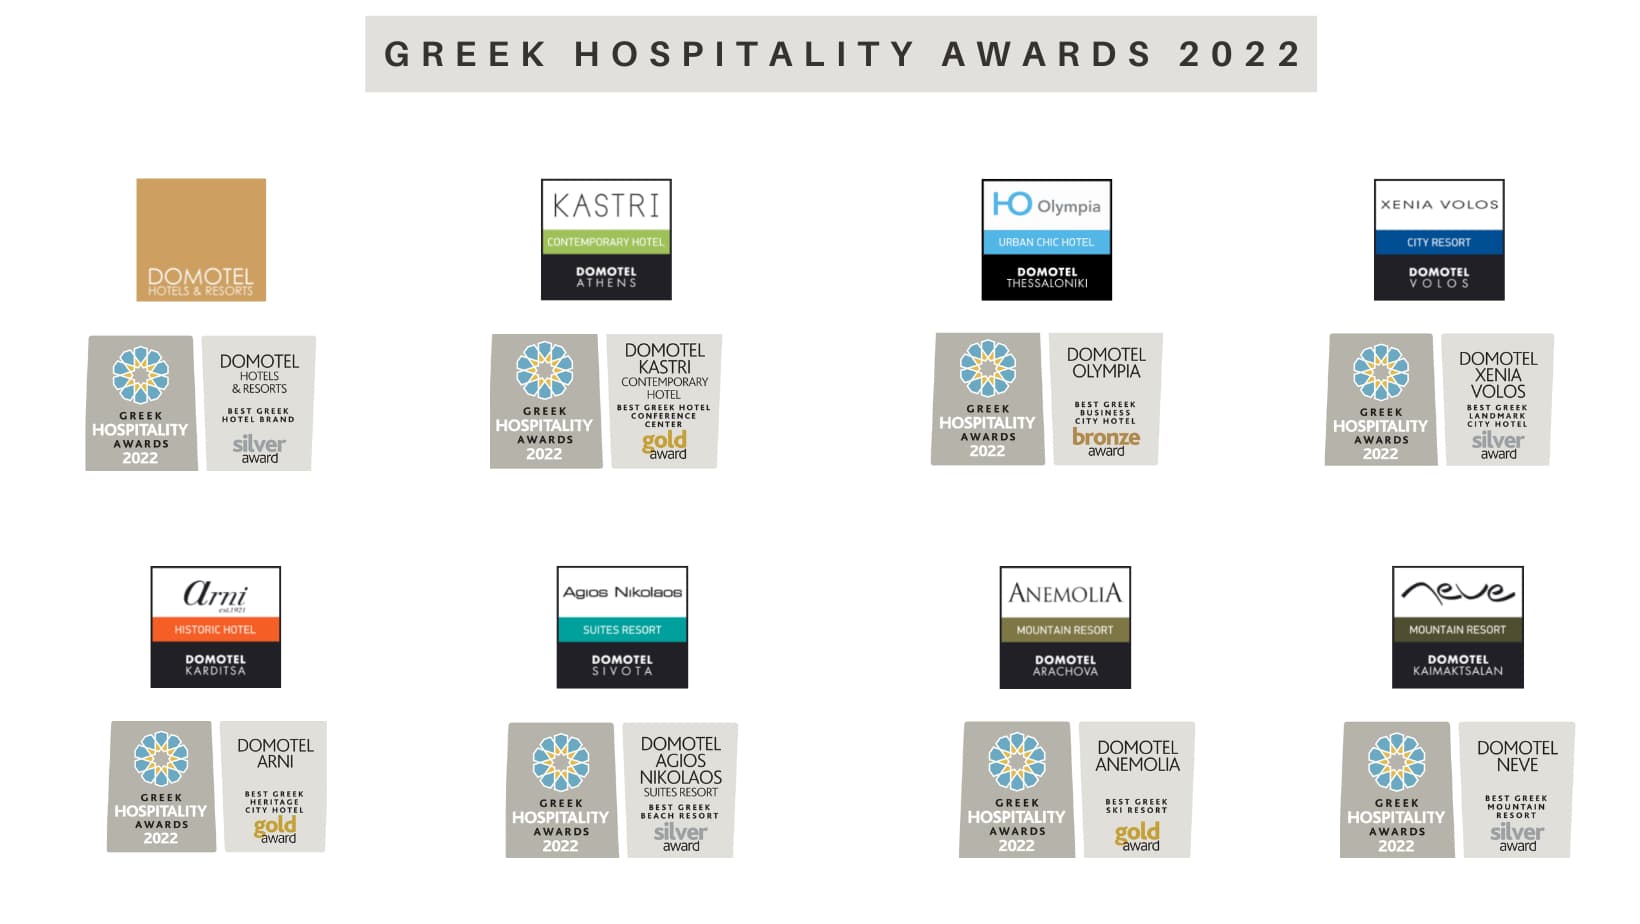 domotel greek hospitality awards 2022